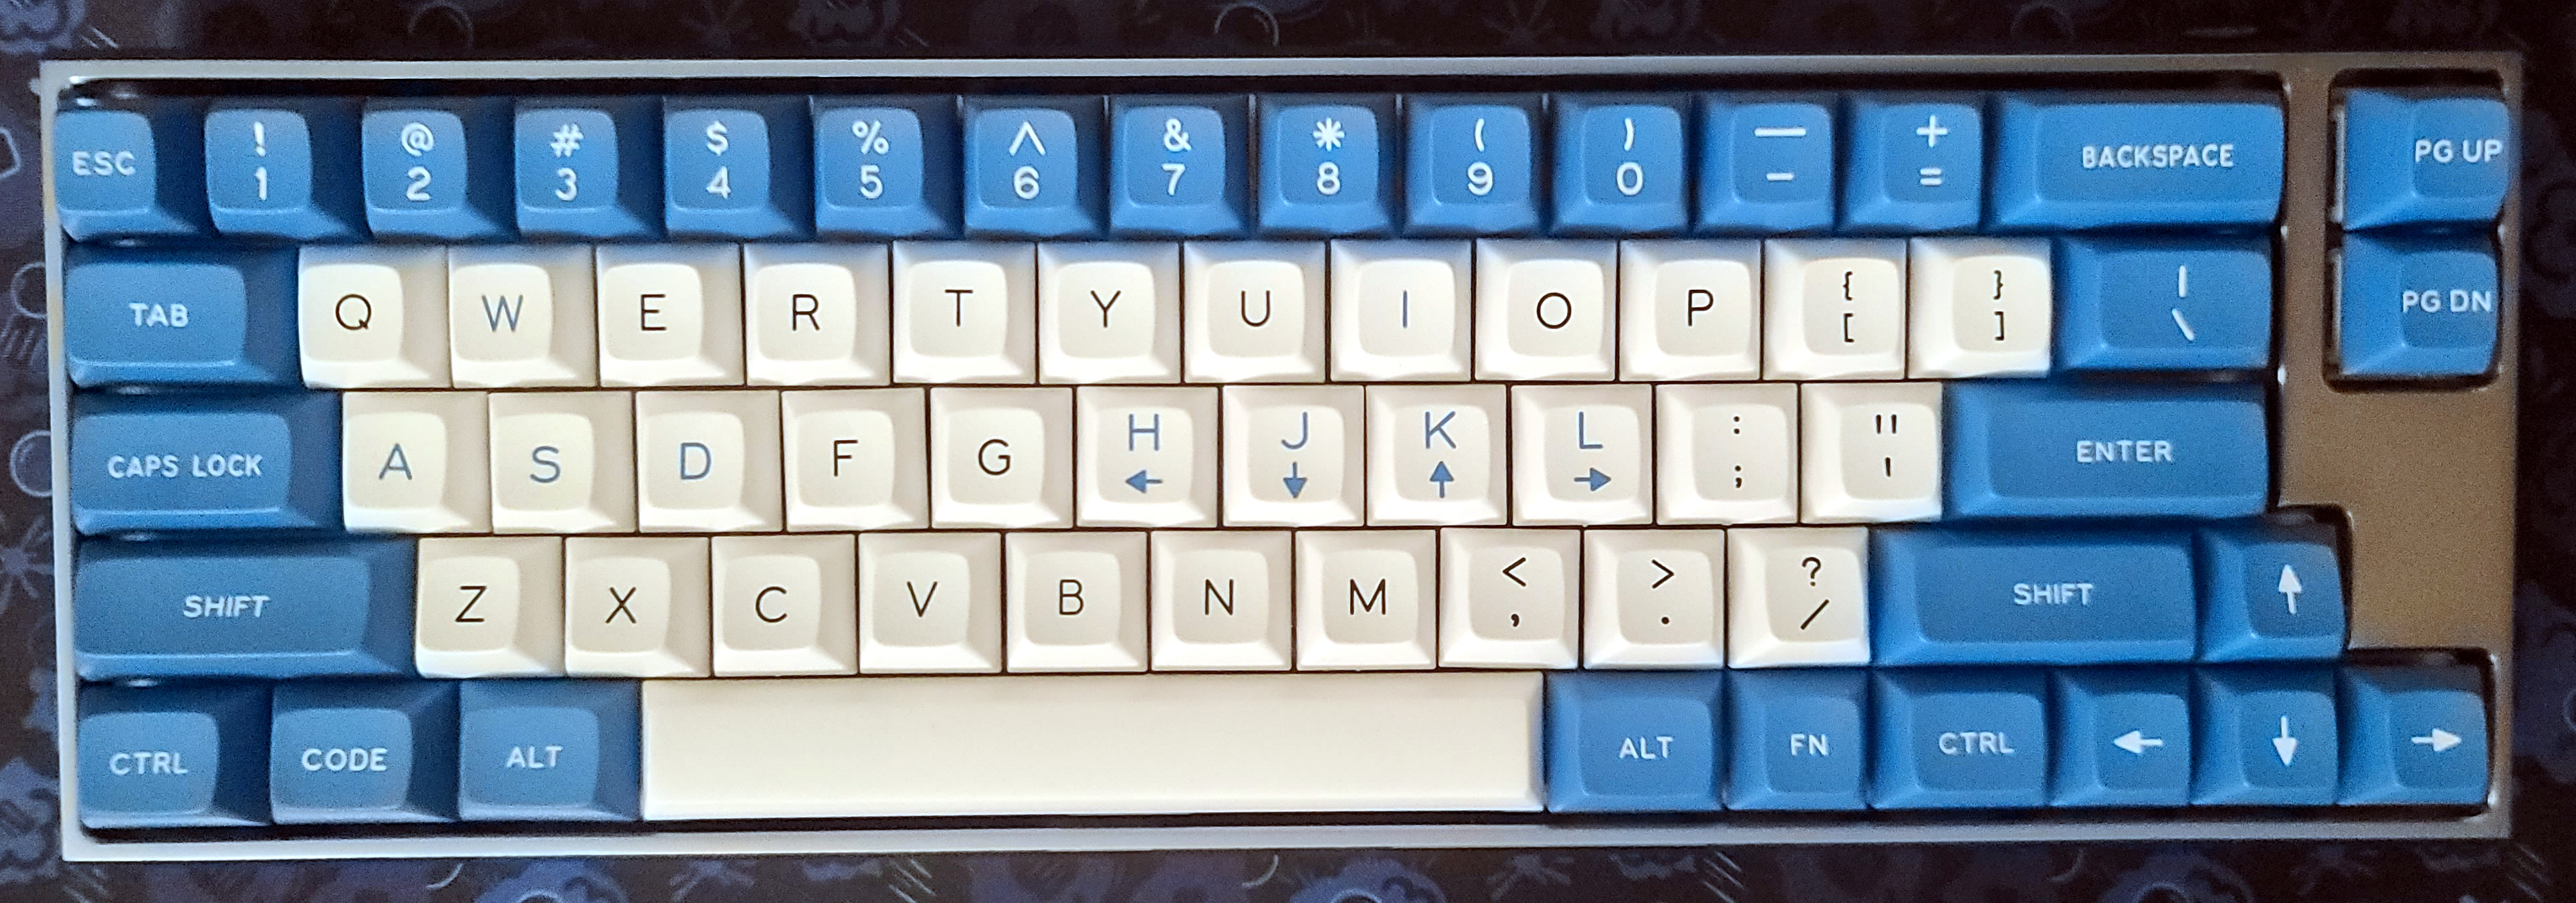 Clueboard Keyboard